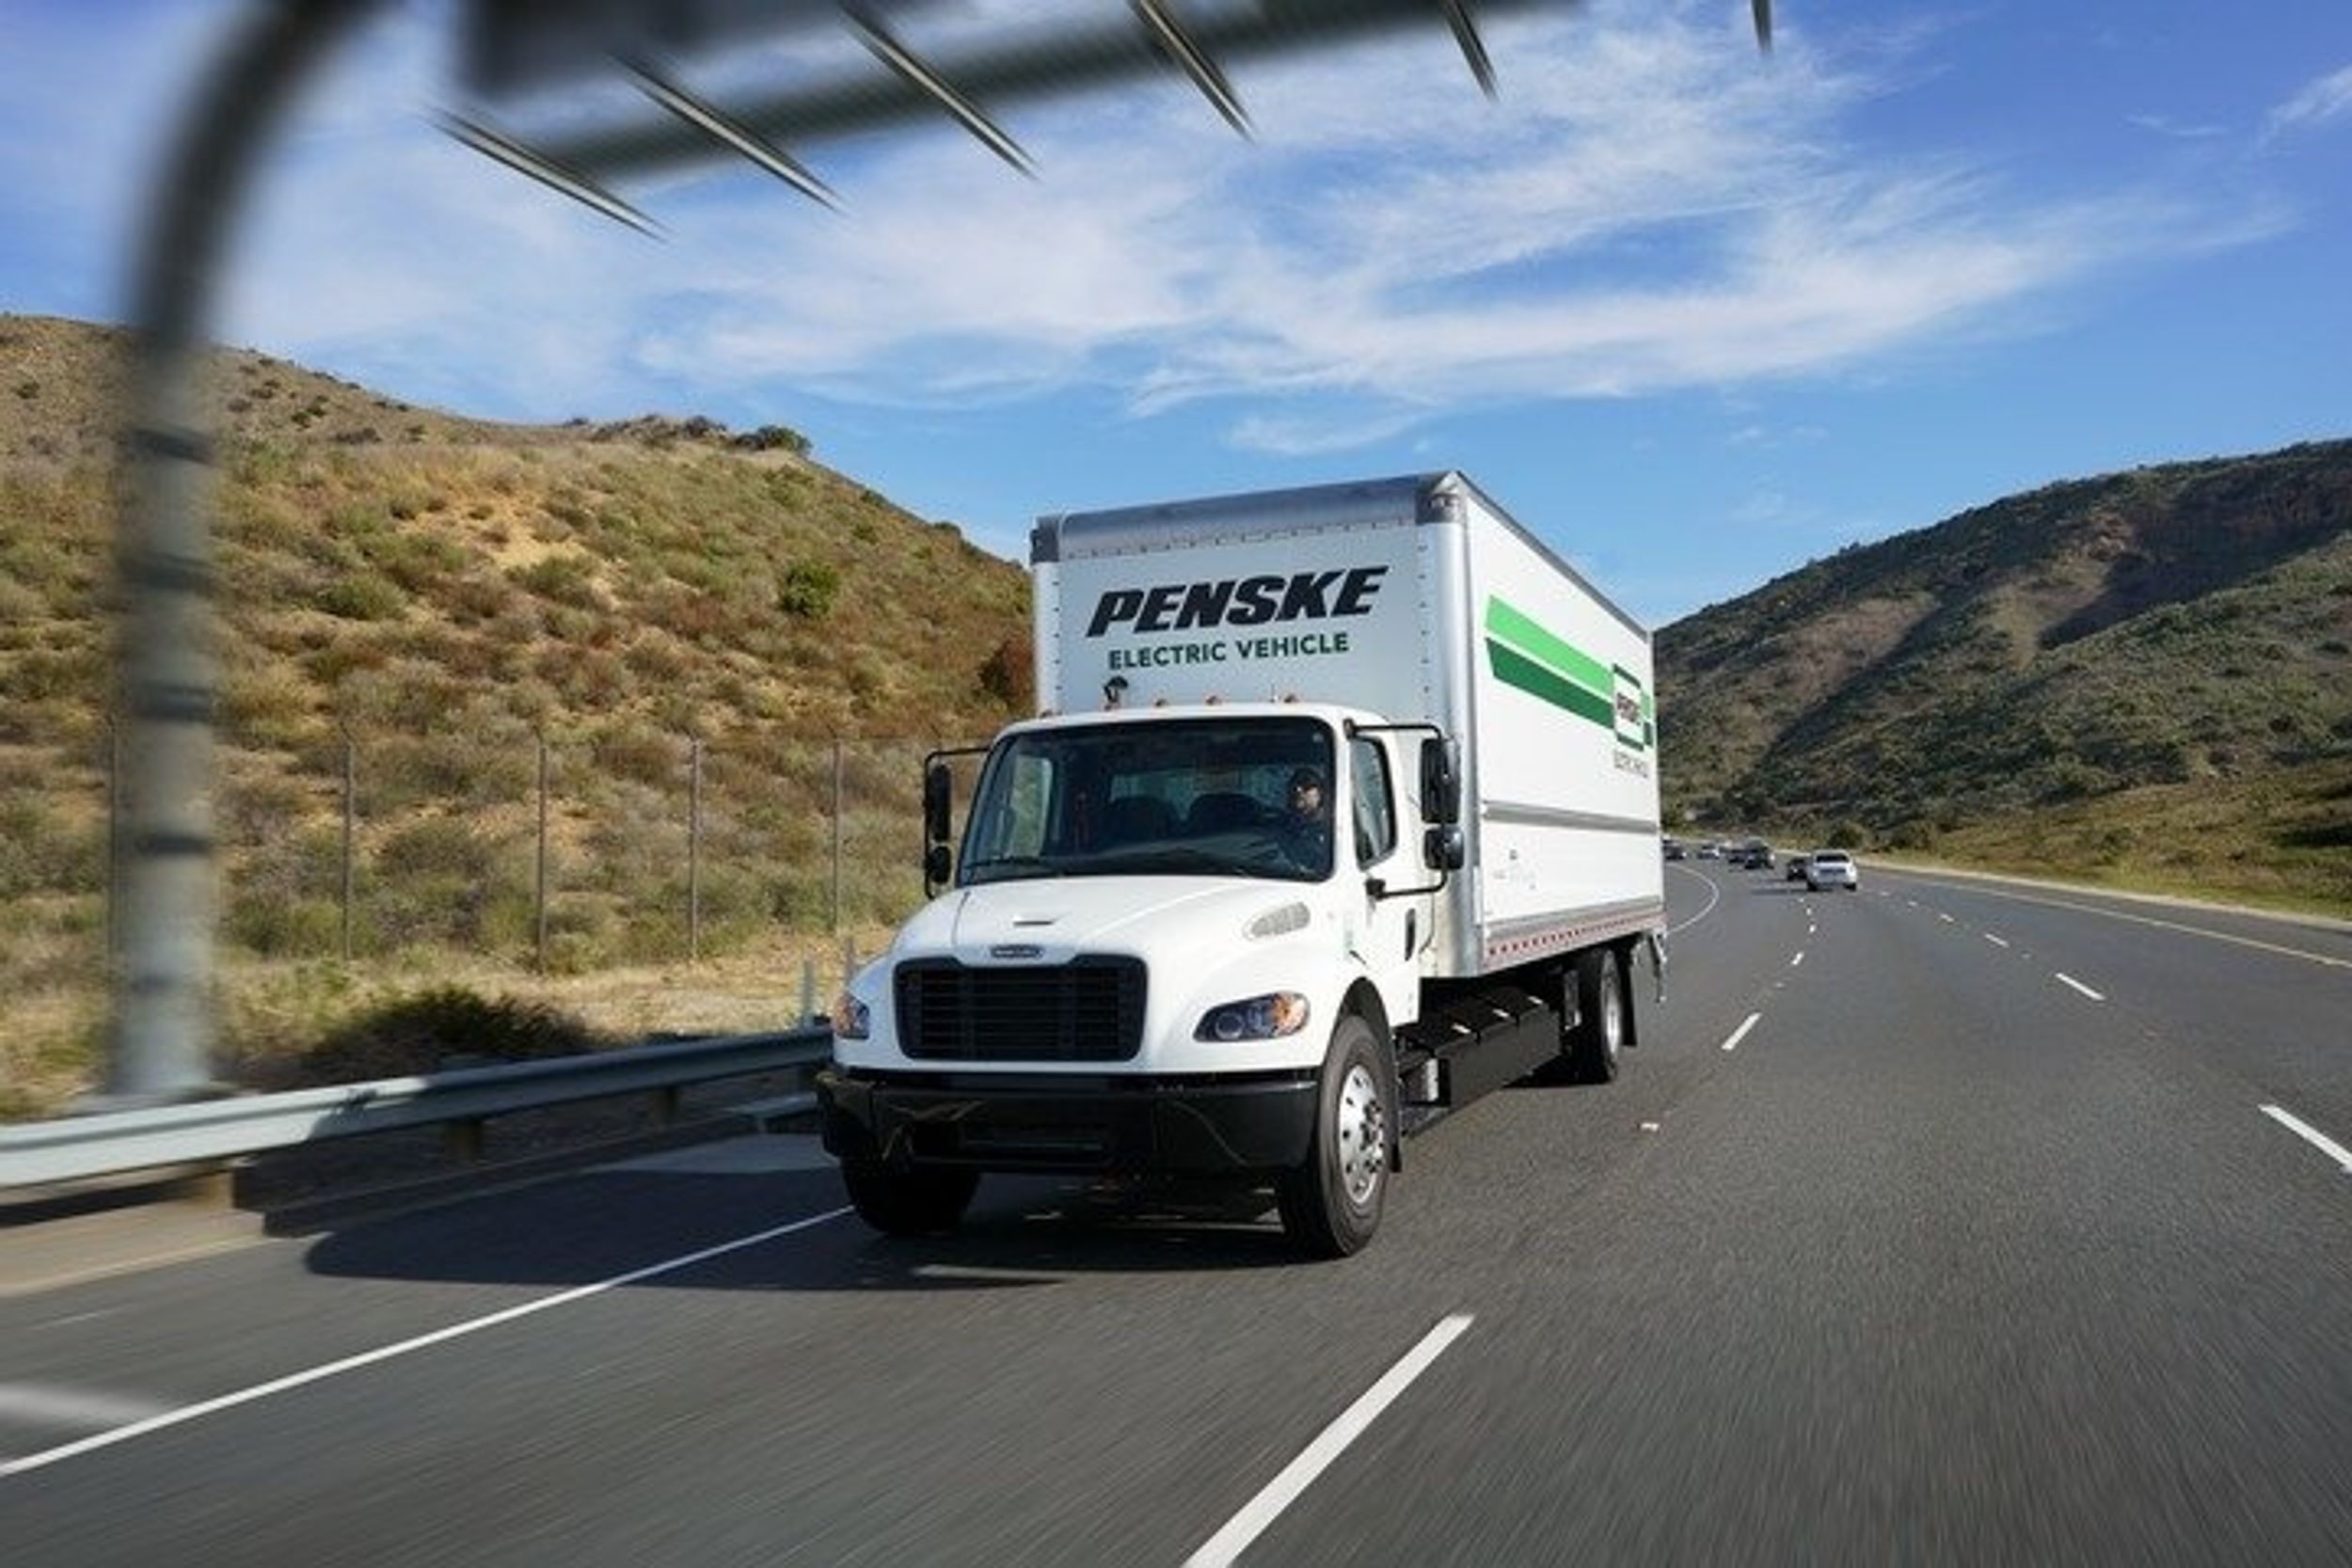 Penske electric vehicle on highway